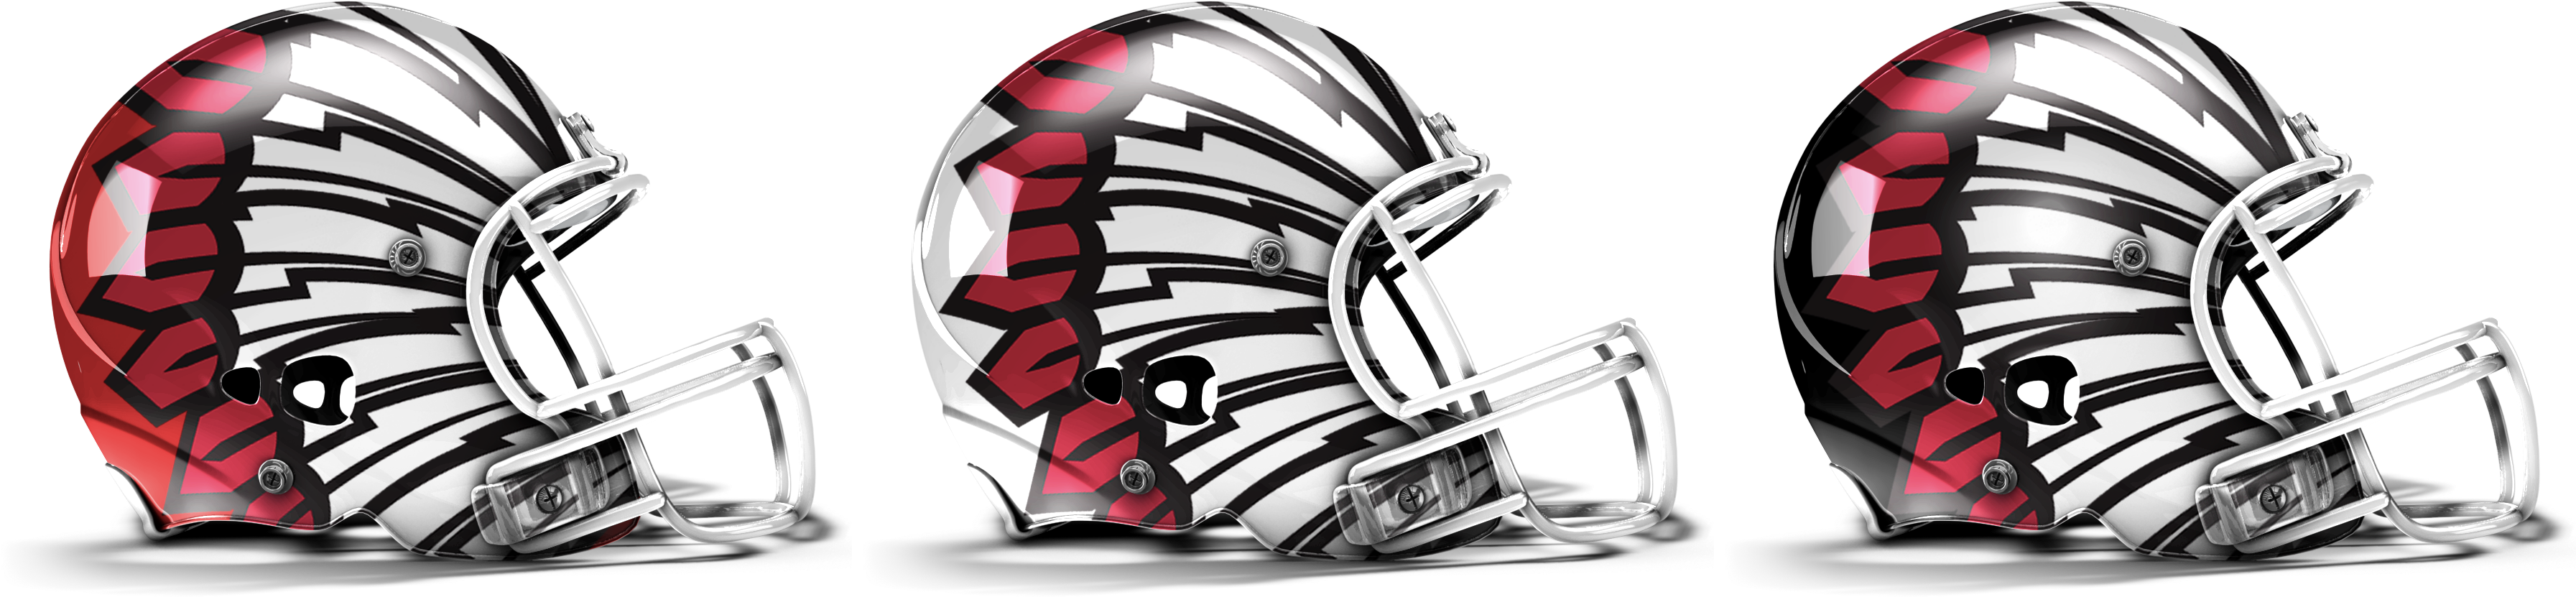 University Of Utah Football Helmet, Hd Png Download